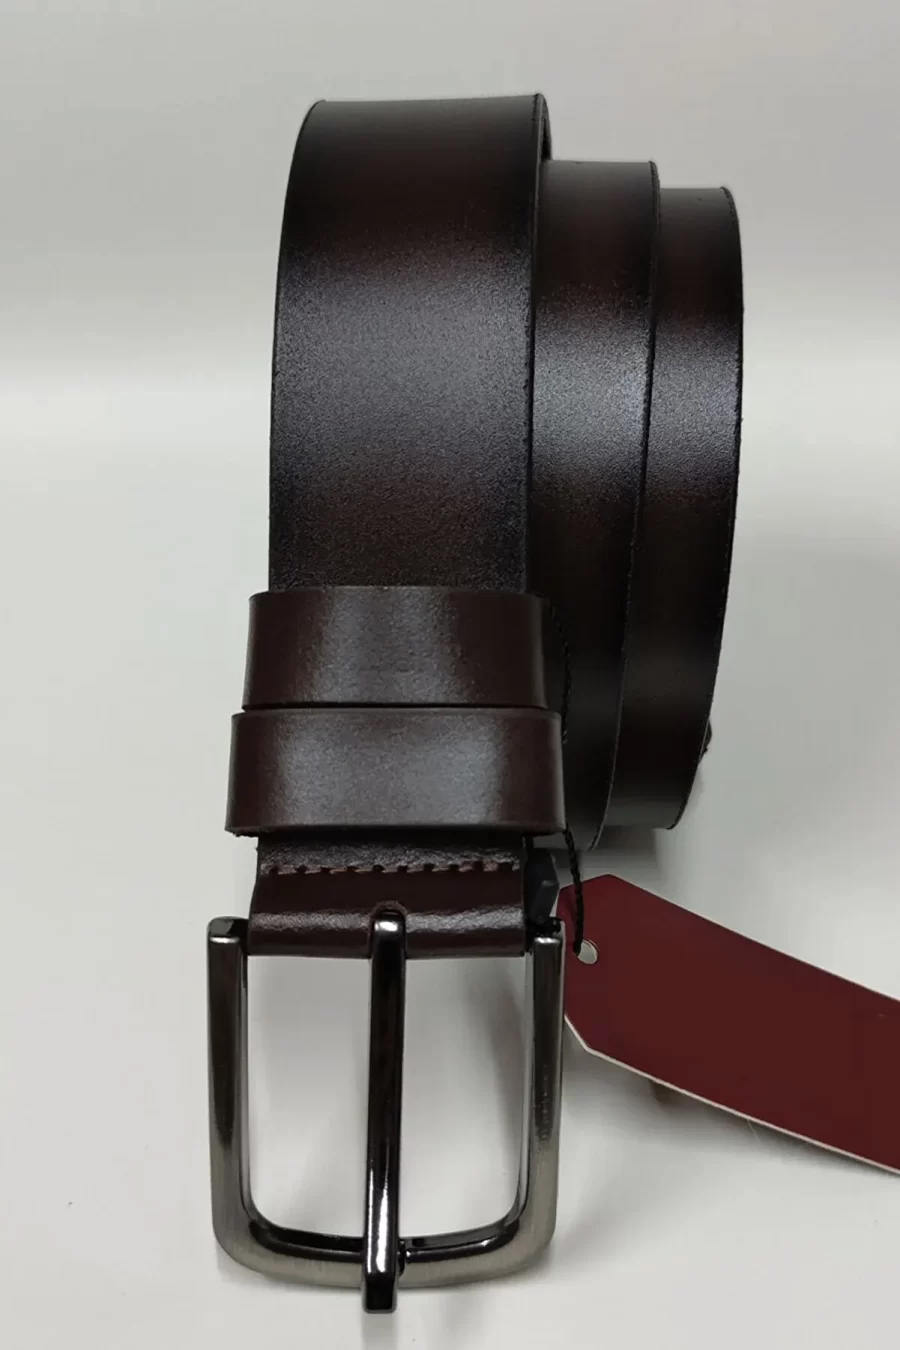 Dark Brown Gents Leather Belt For Jeans KD 111 2 1